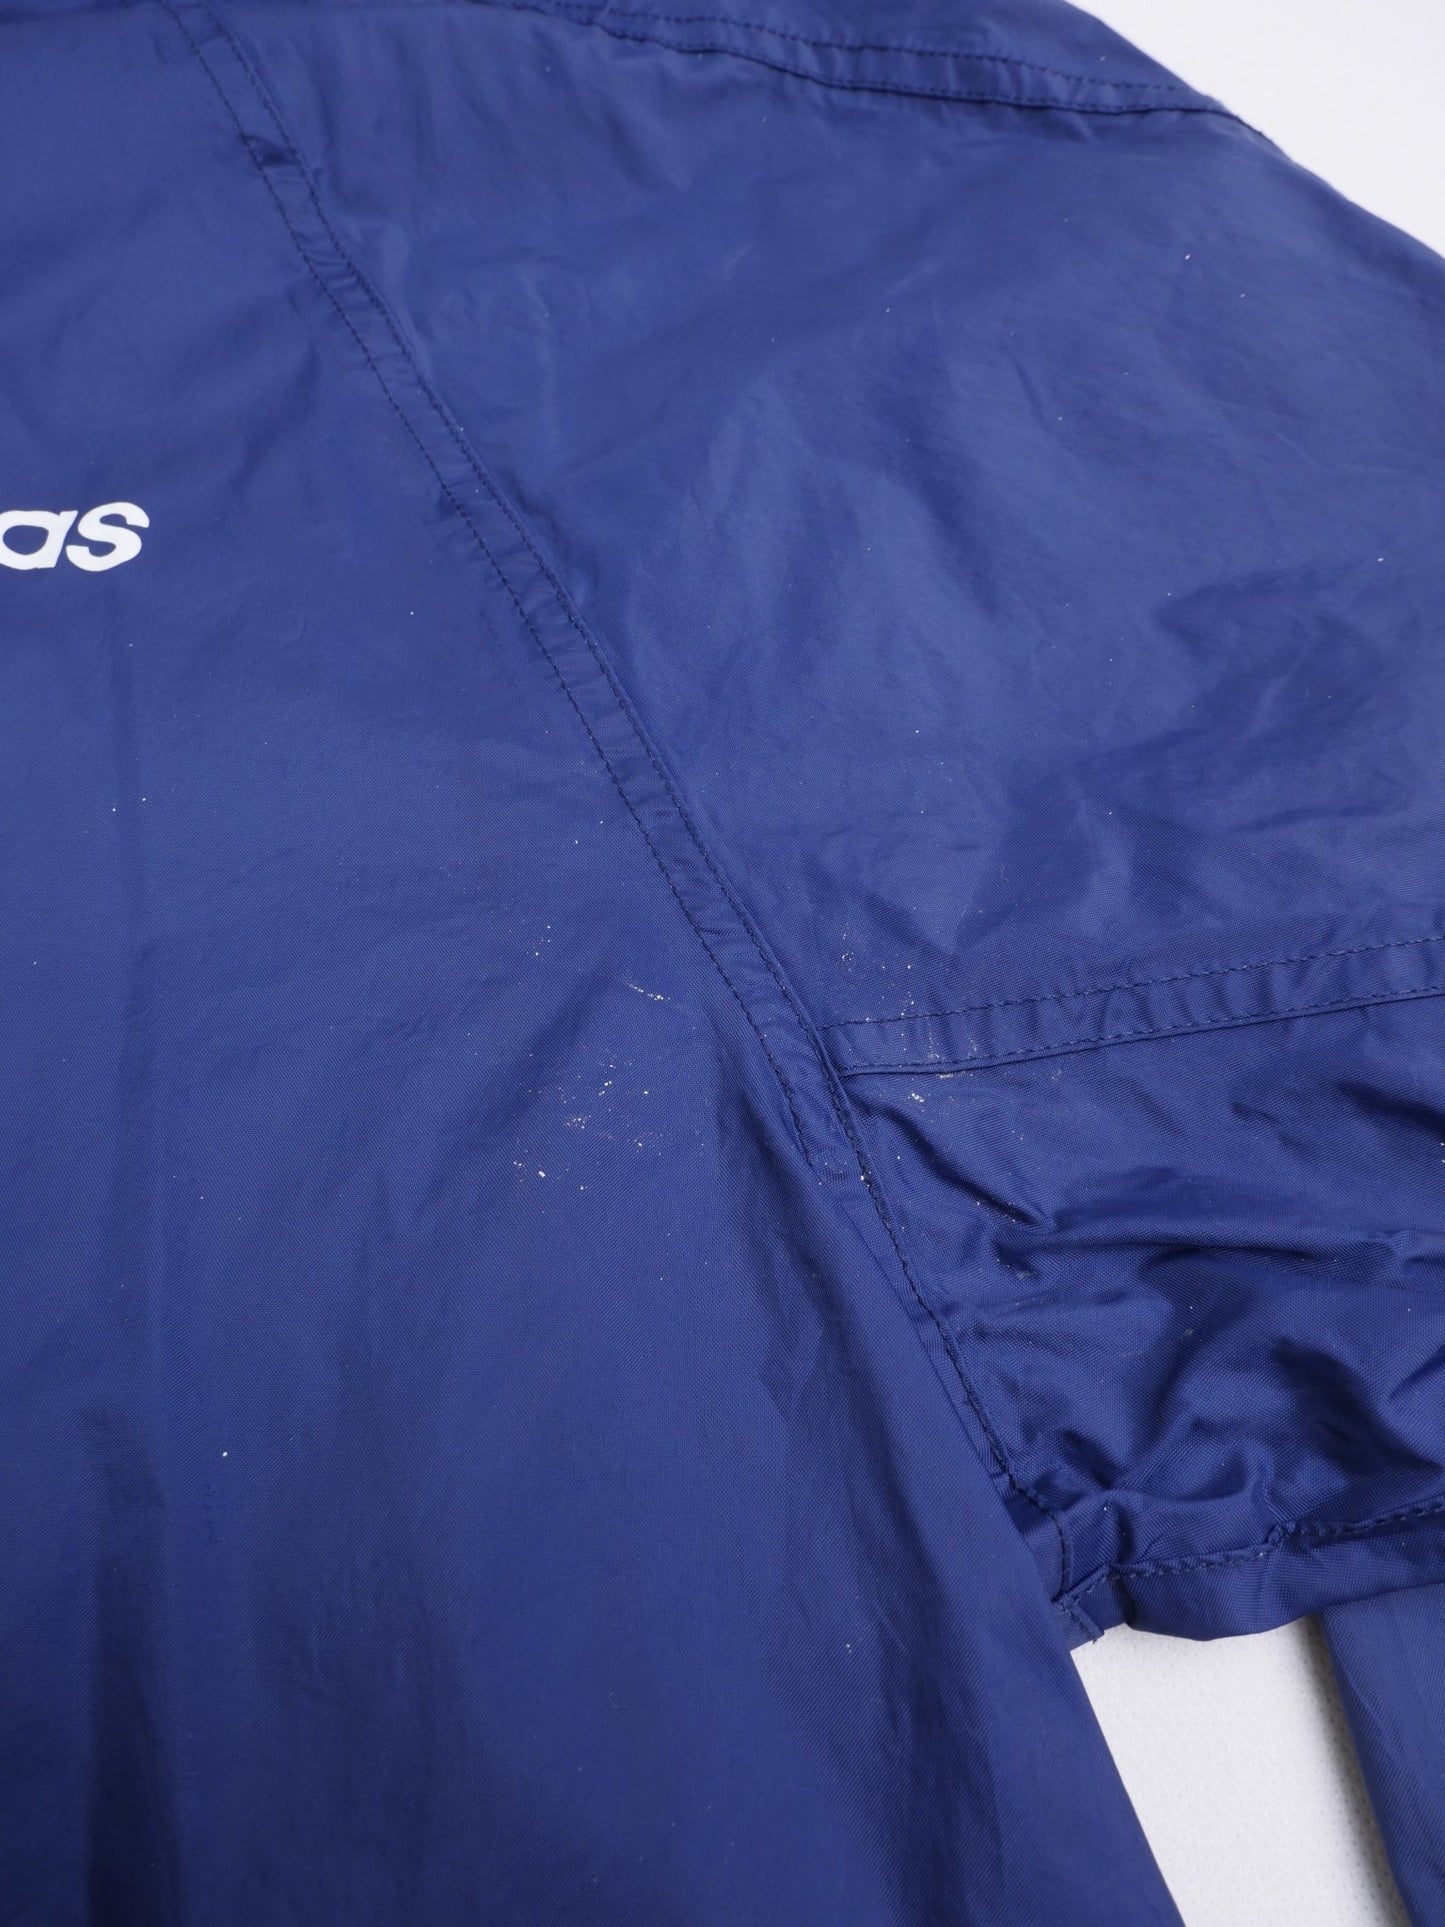 Adidas printed Logo blue Track Jackets - Peeces